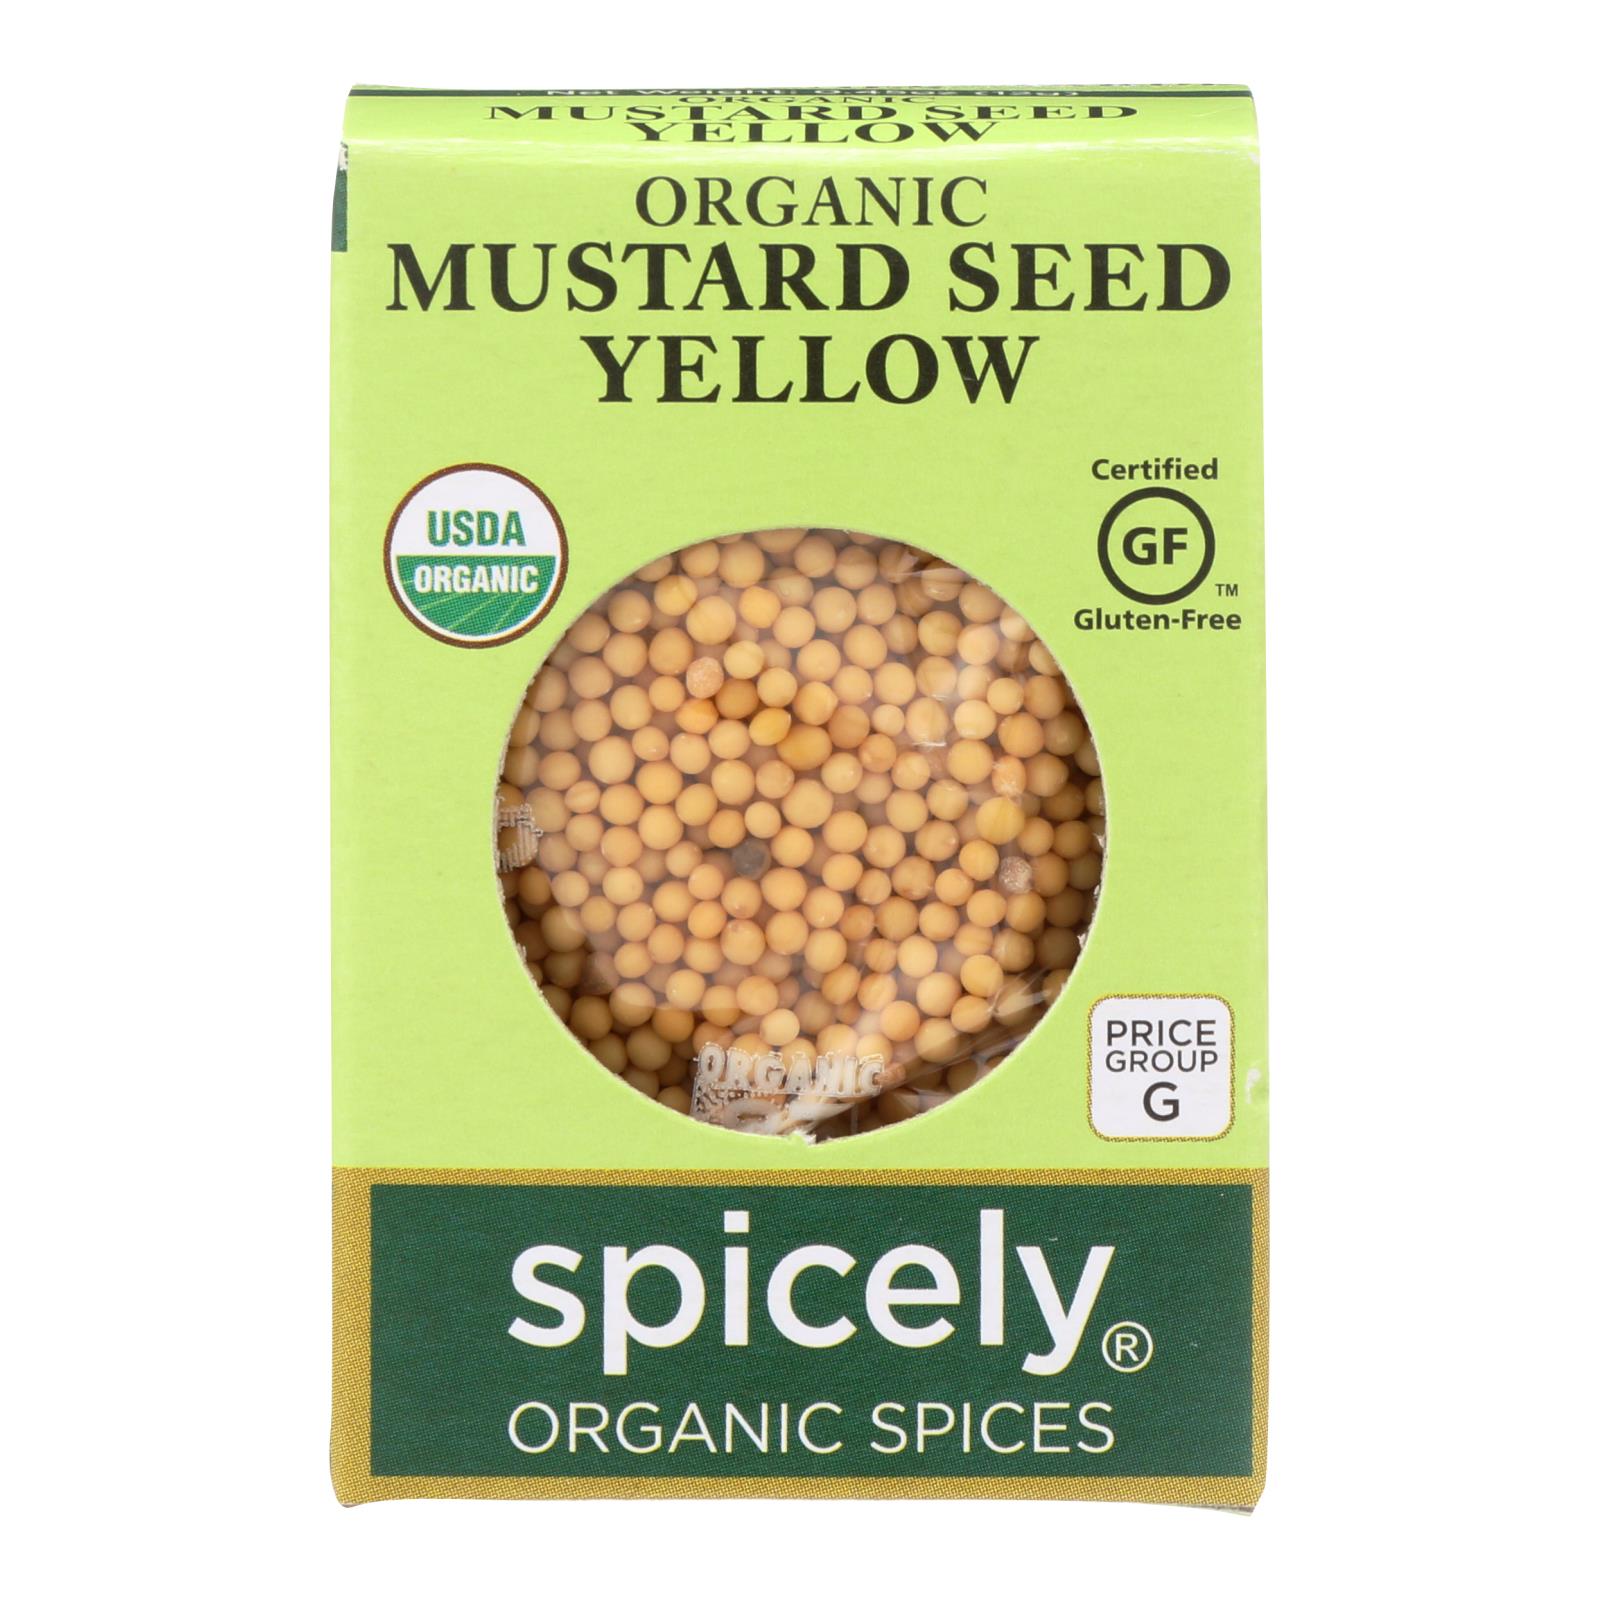 Spicely Organics - Organic Mustard Seed - Yellow - 6개 묶음상품 - 0.45 oz.